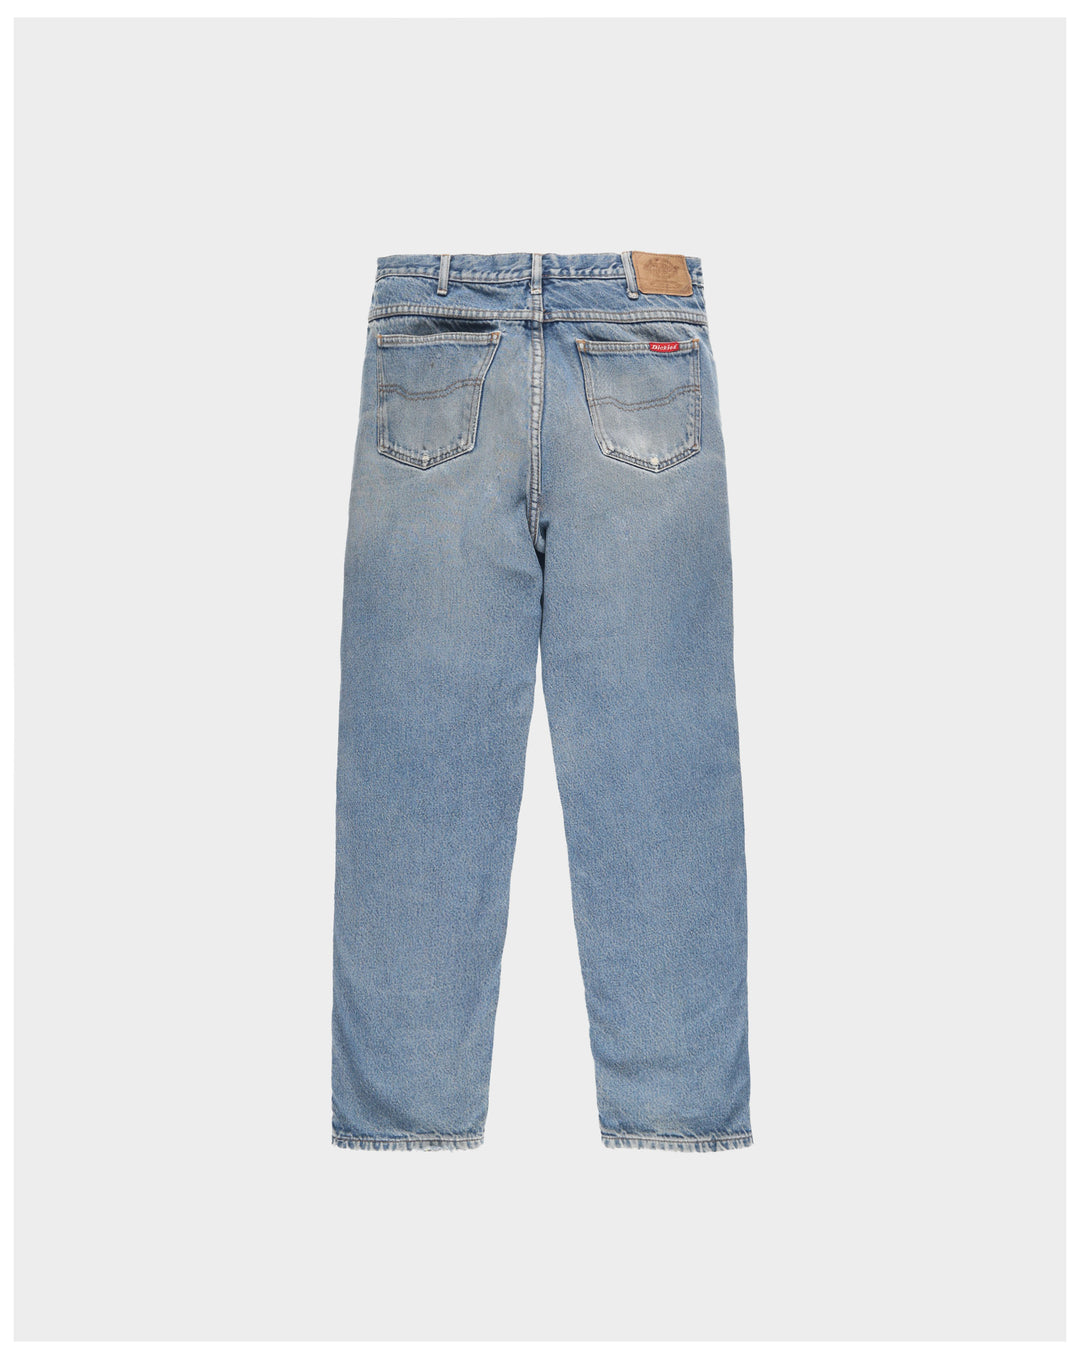 Contrast High CHxX Xperimental Jeans  - XHIBITION